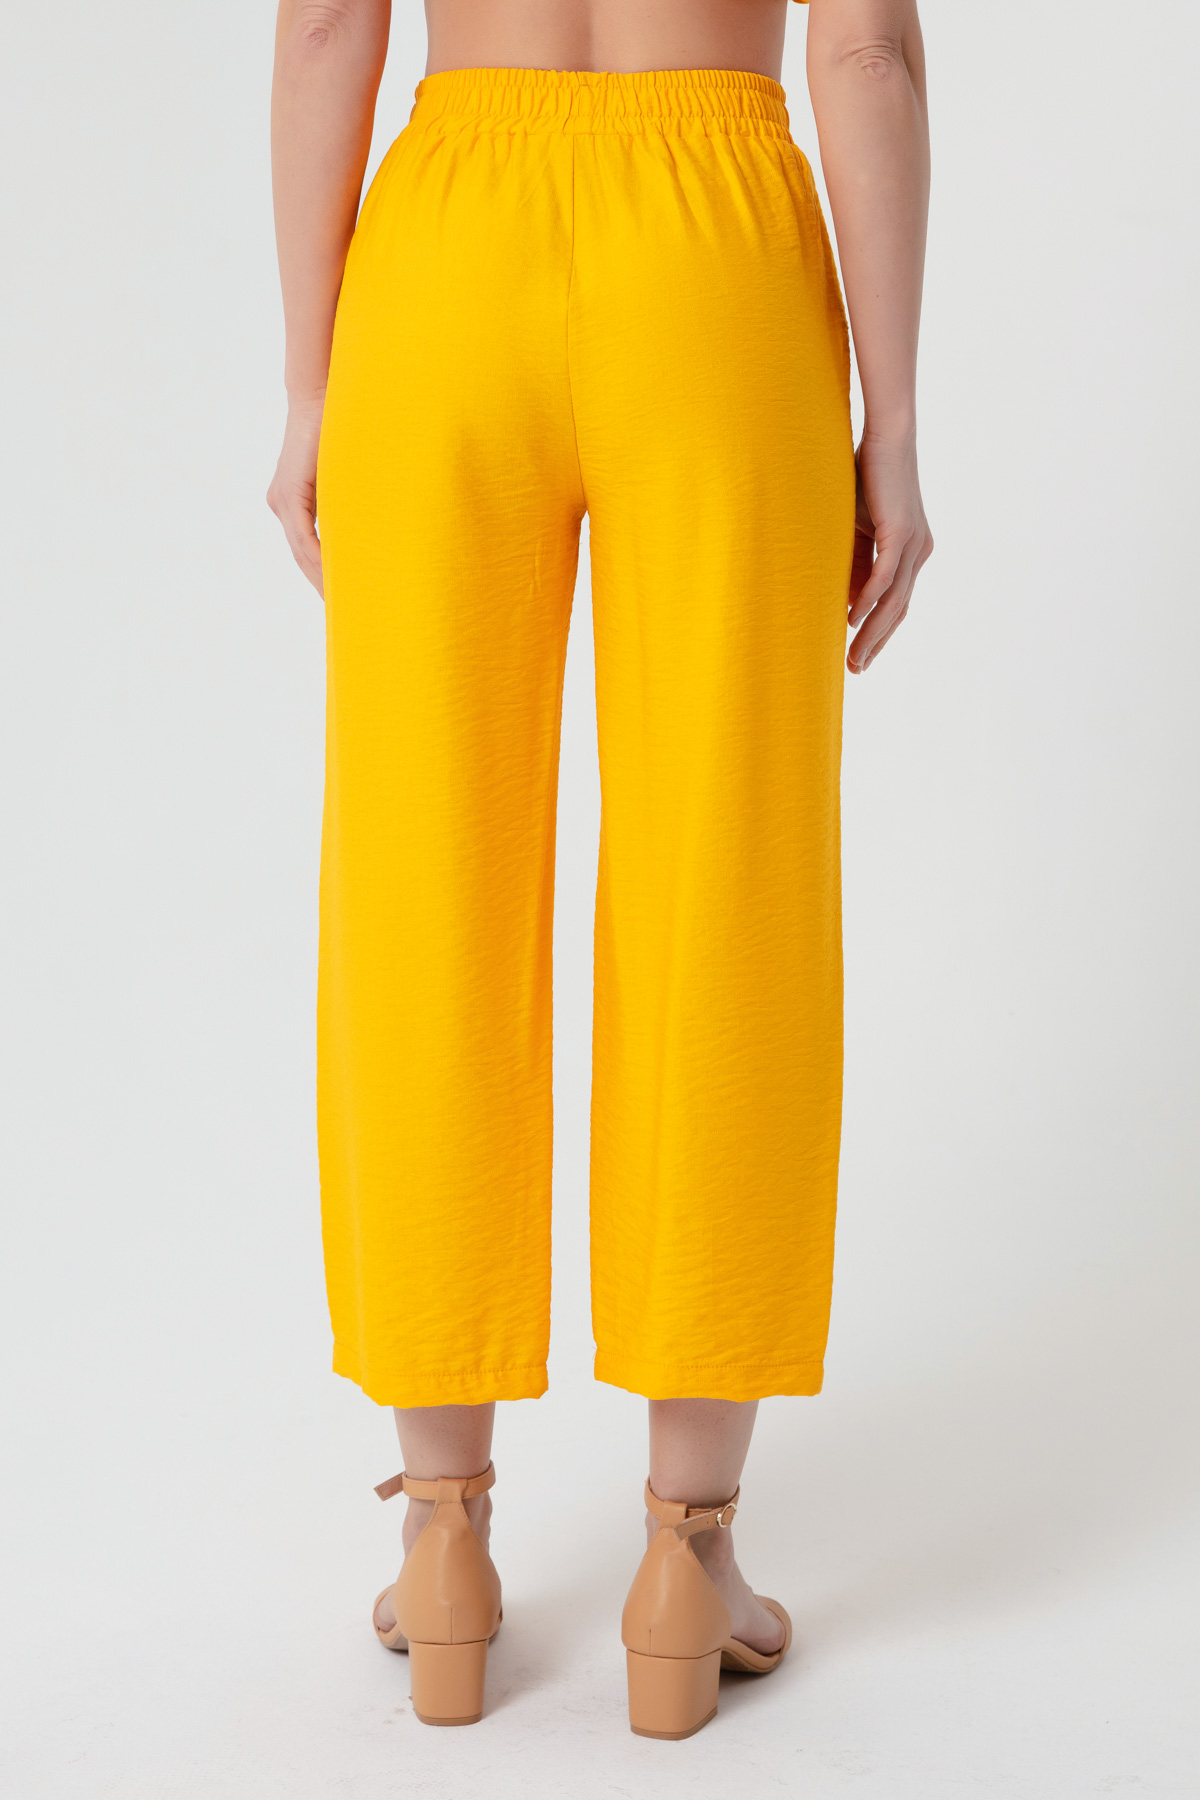 Women's Yellow Linen Pants